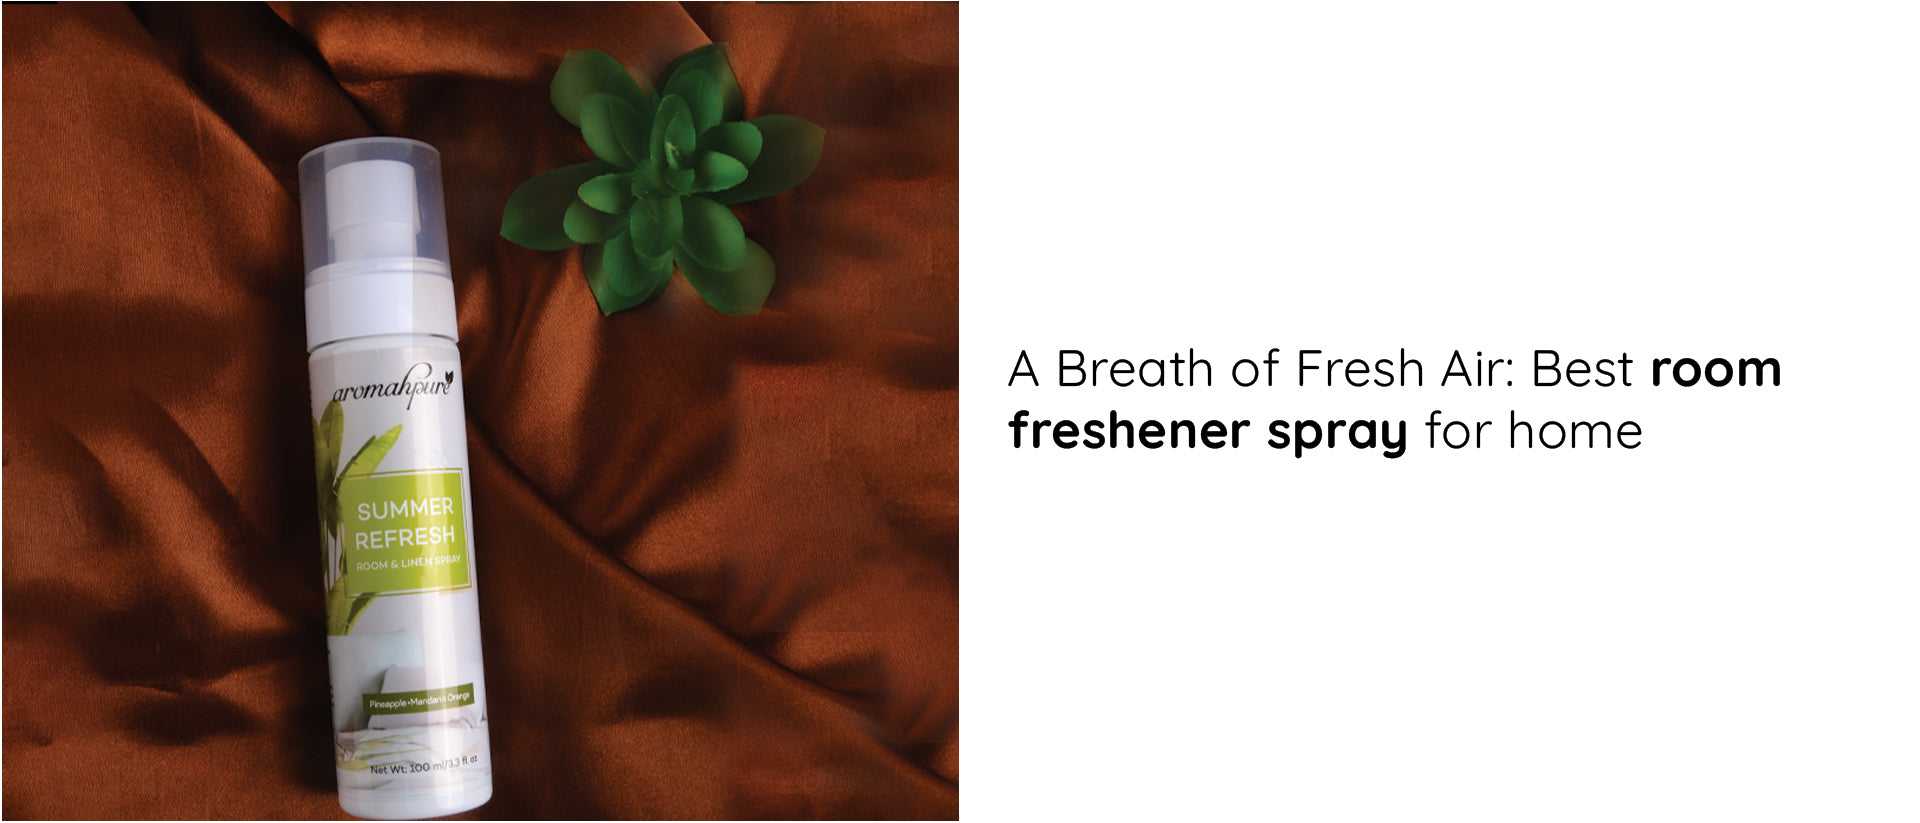 A Breath of Fresh Air: Best room freshener spray for home